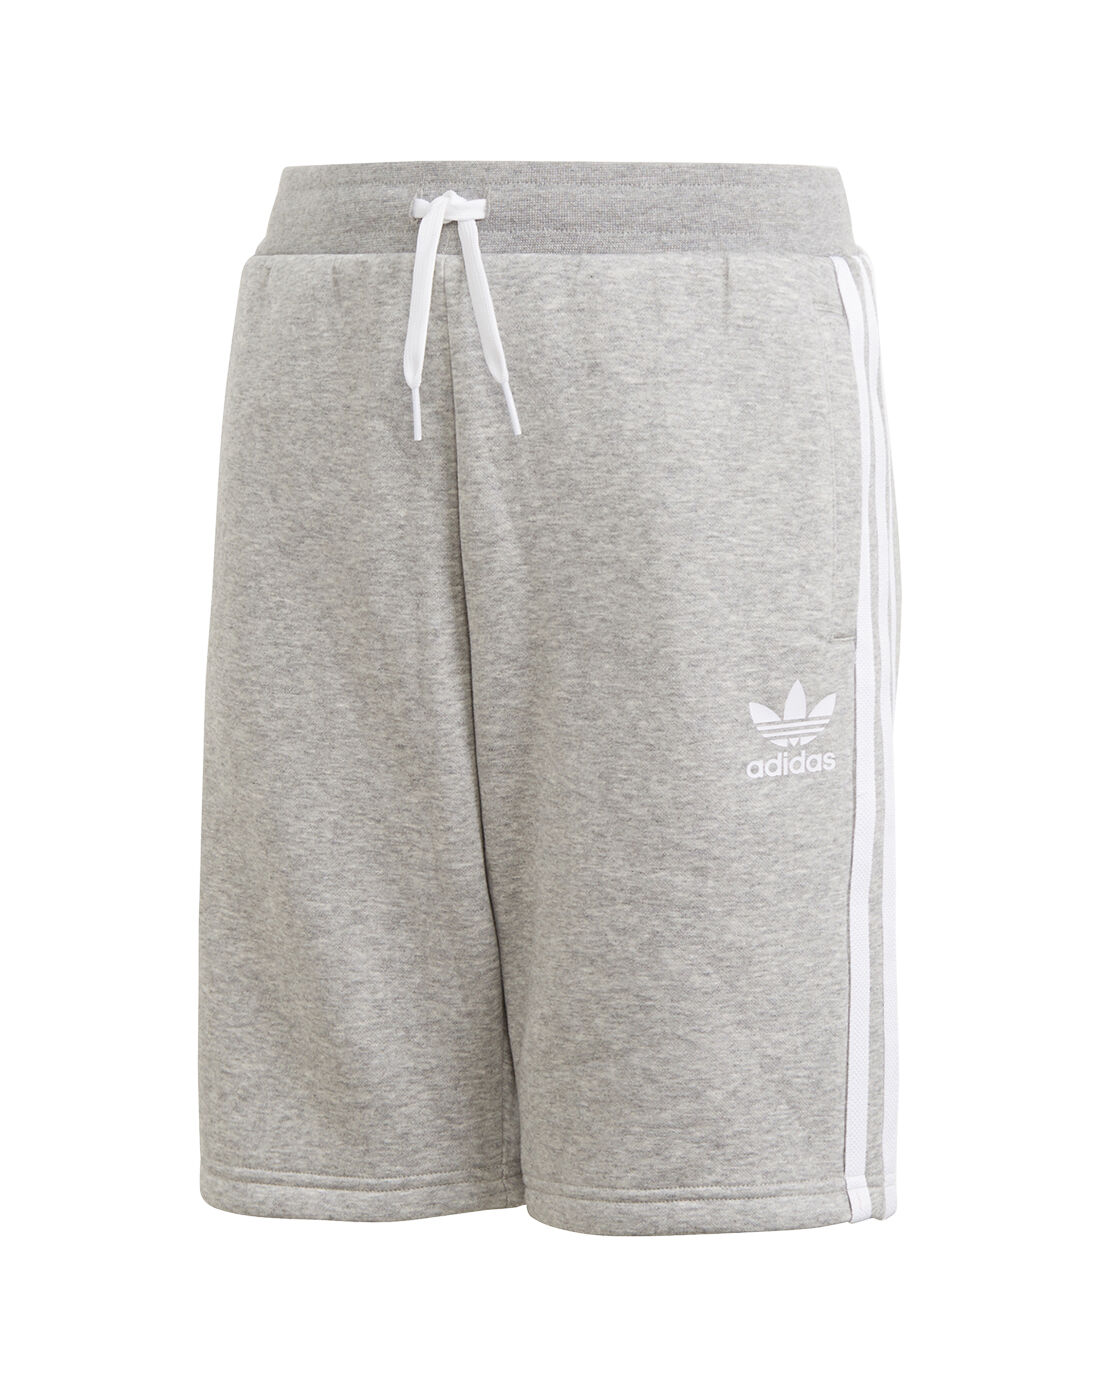 Boy's Grey adidas Originals Shorts 